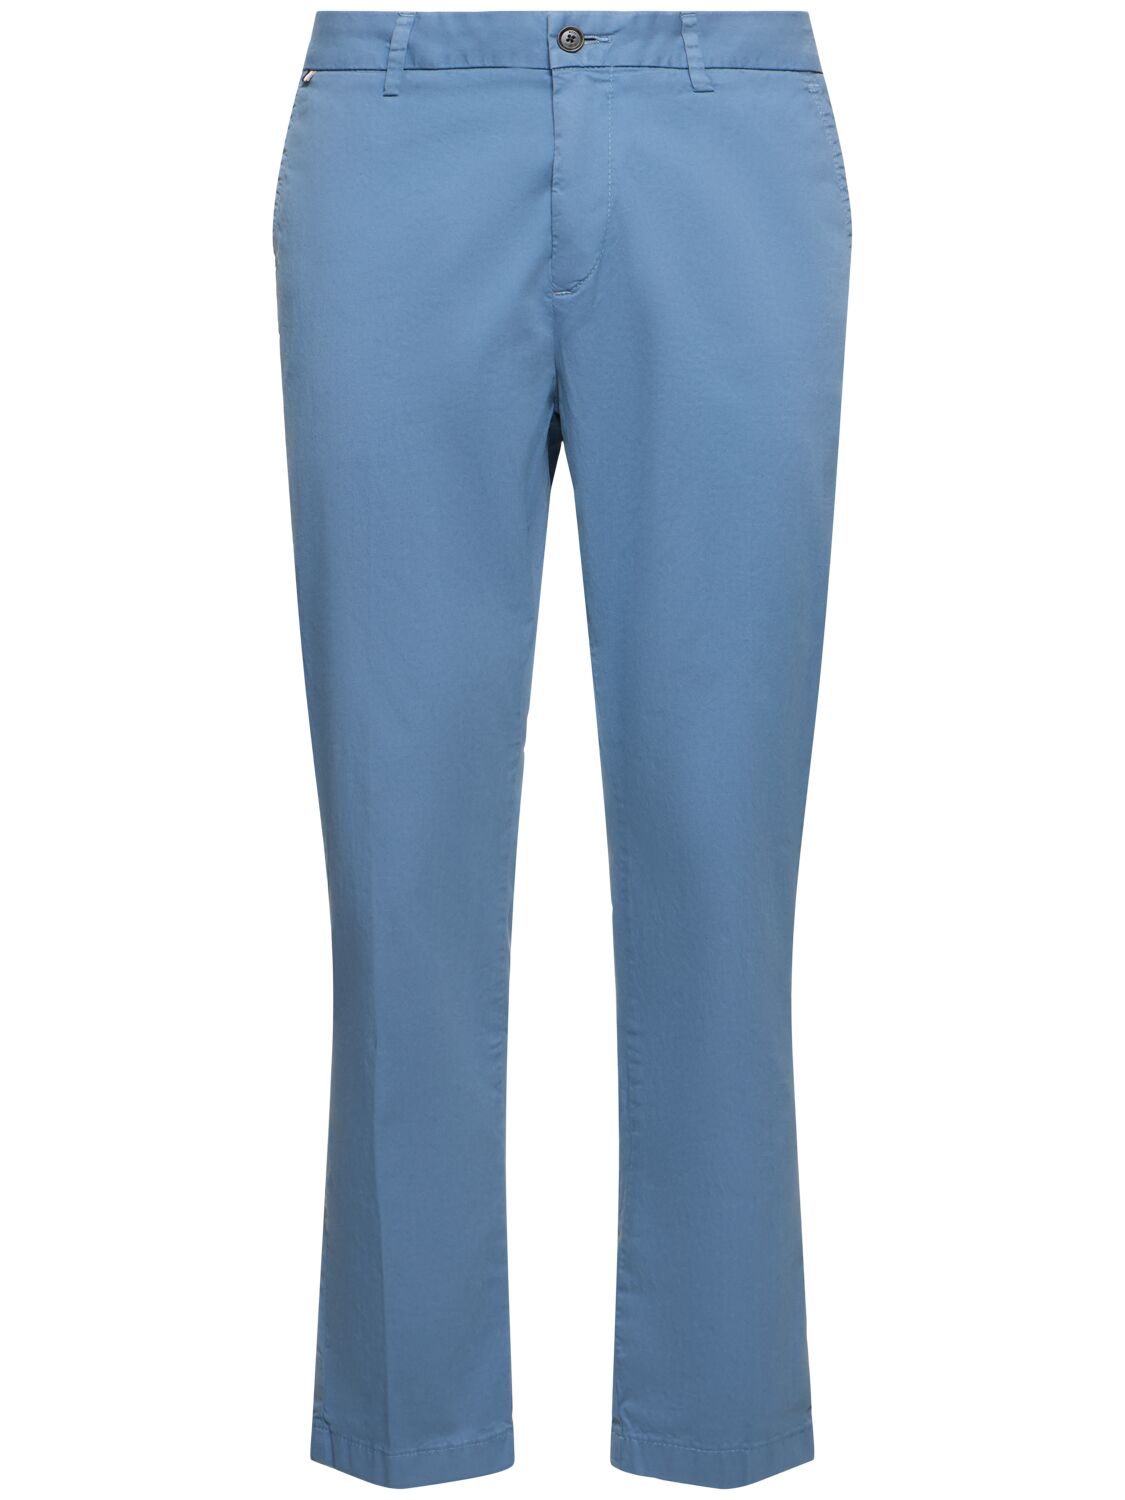 Hugo Boss Kaiton Stretch Cotton Pants In Light Blue